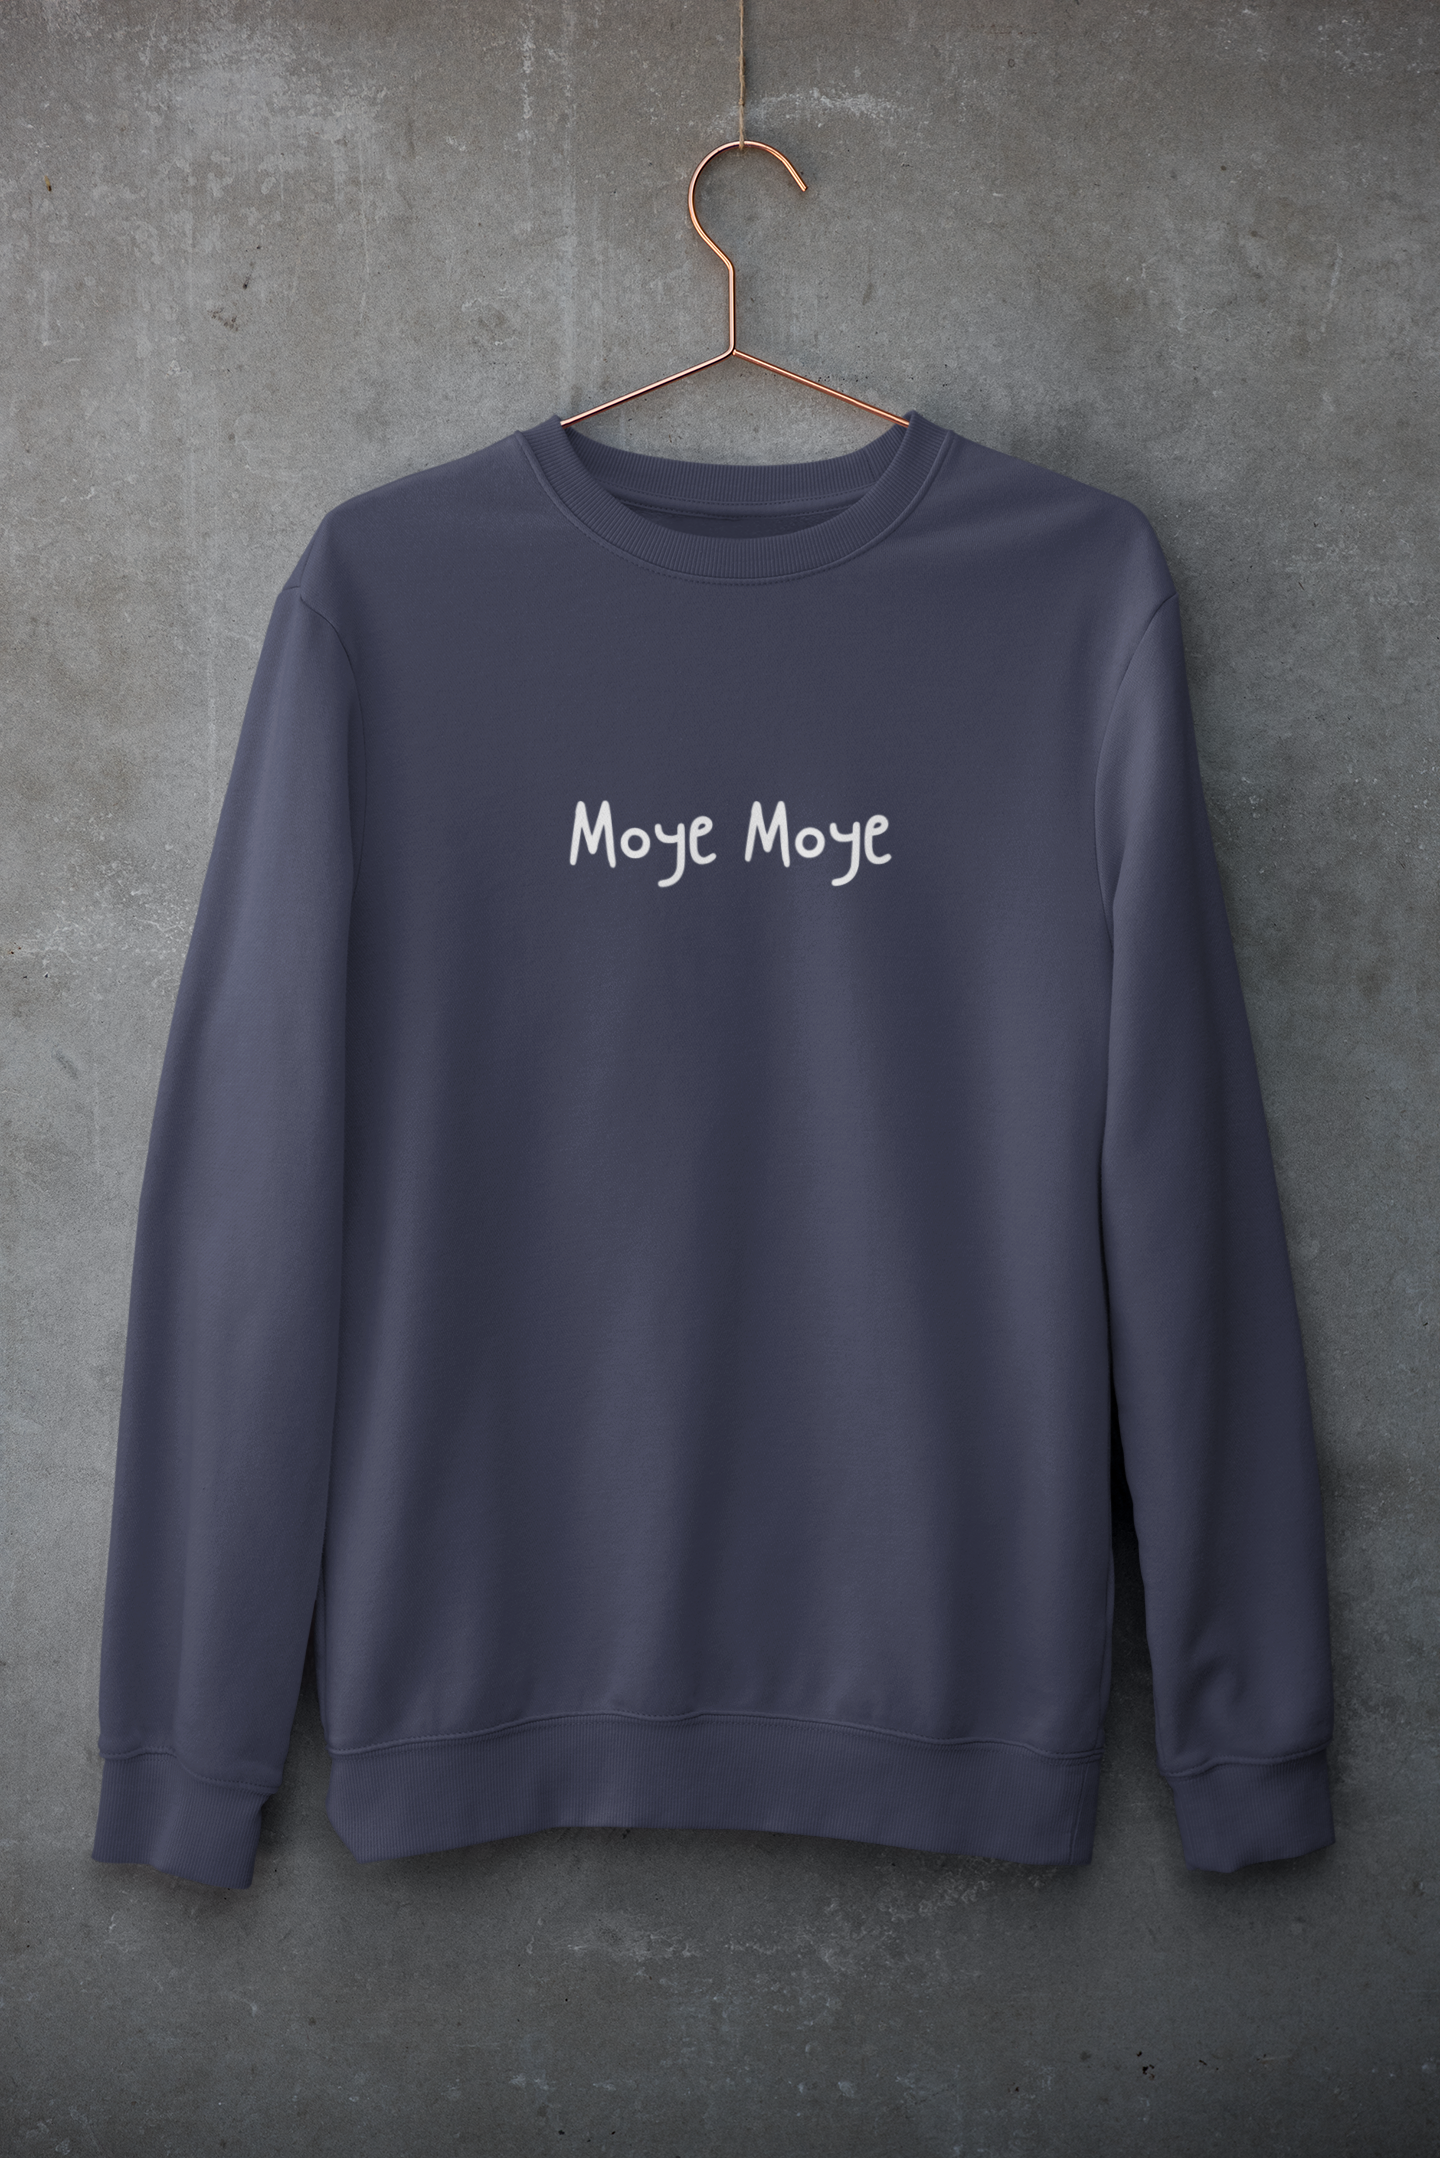 Moye Moye - Cotton Rich Light Weight Crew Neck Sweatshirt Men & Women